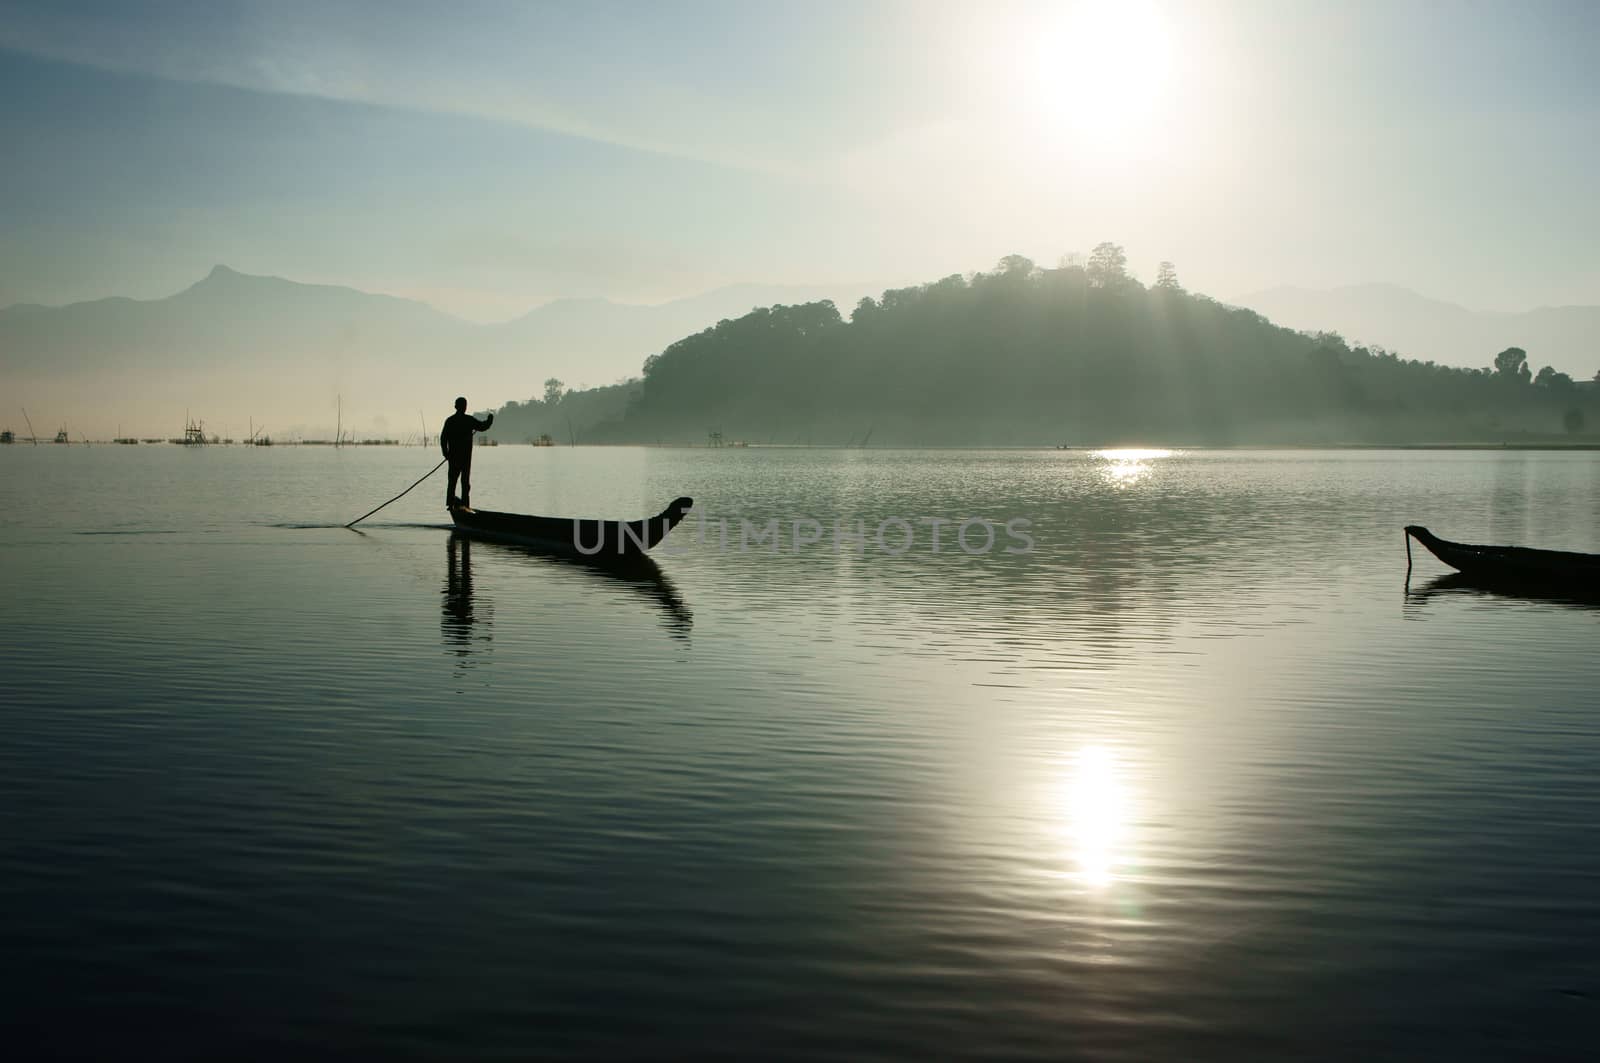 sunrise on lake,fisherman rowing the boat by xuanhuongho